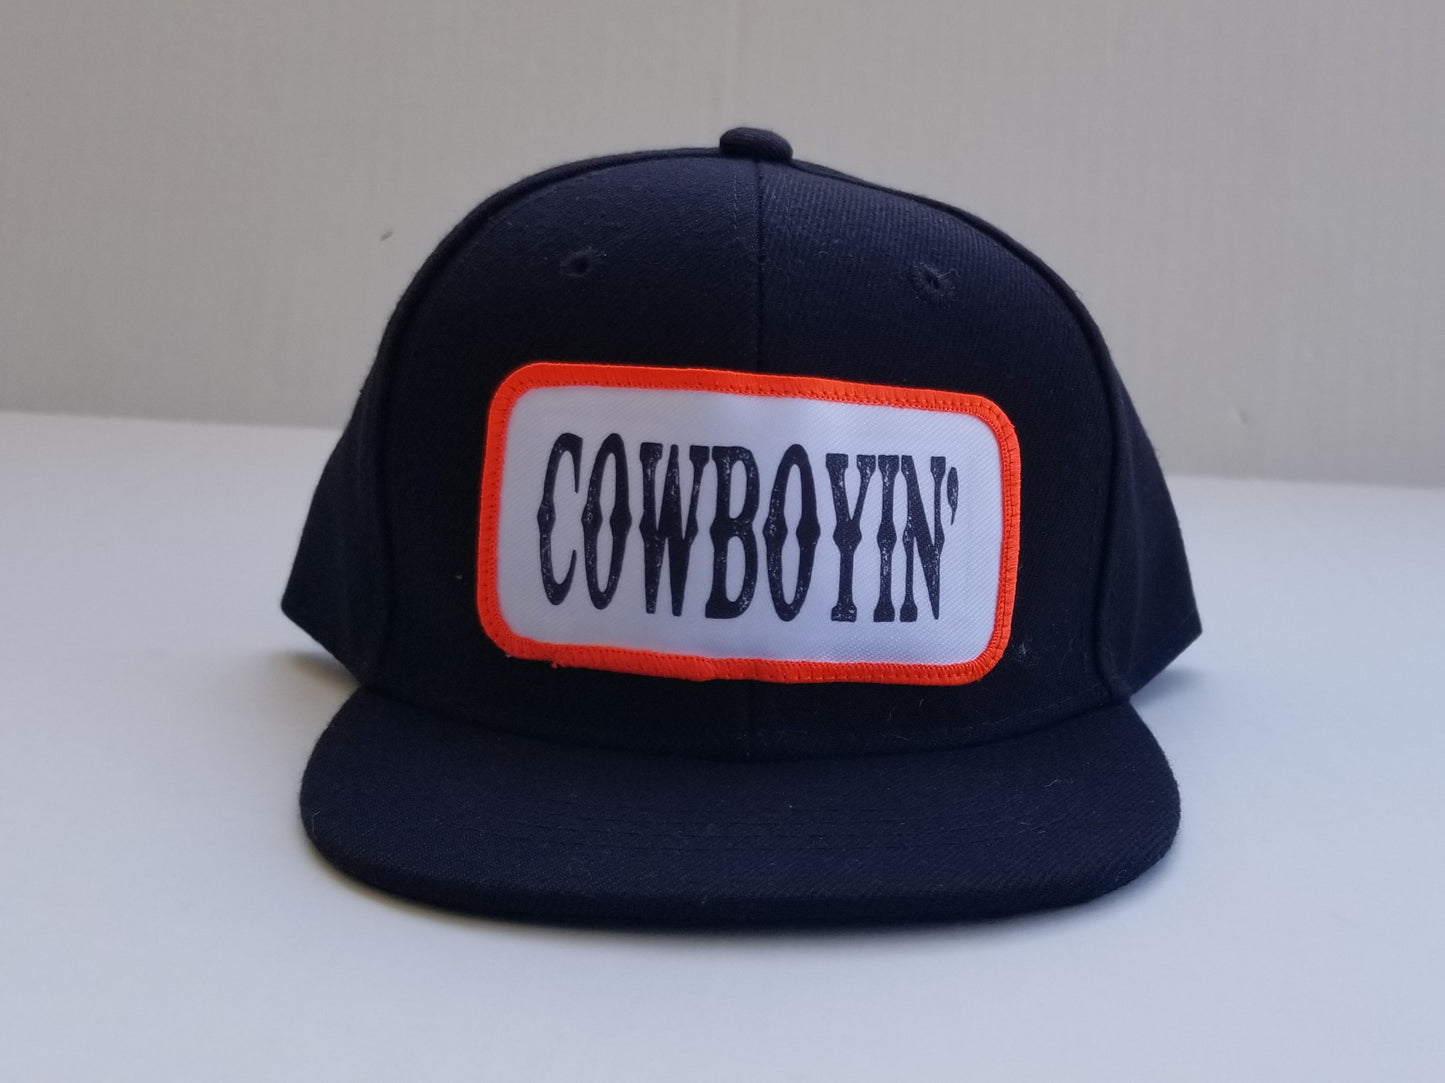 Cowboyin’ - Infant / Toddler Snapback Hat - Neon Orange/Black